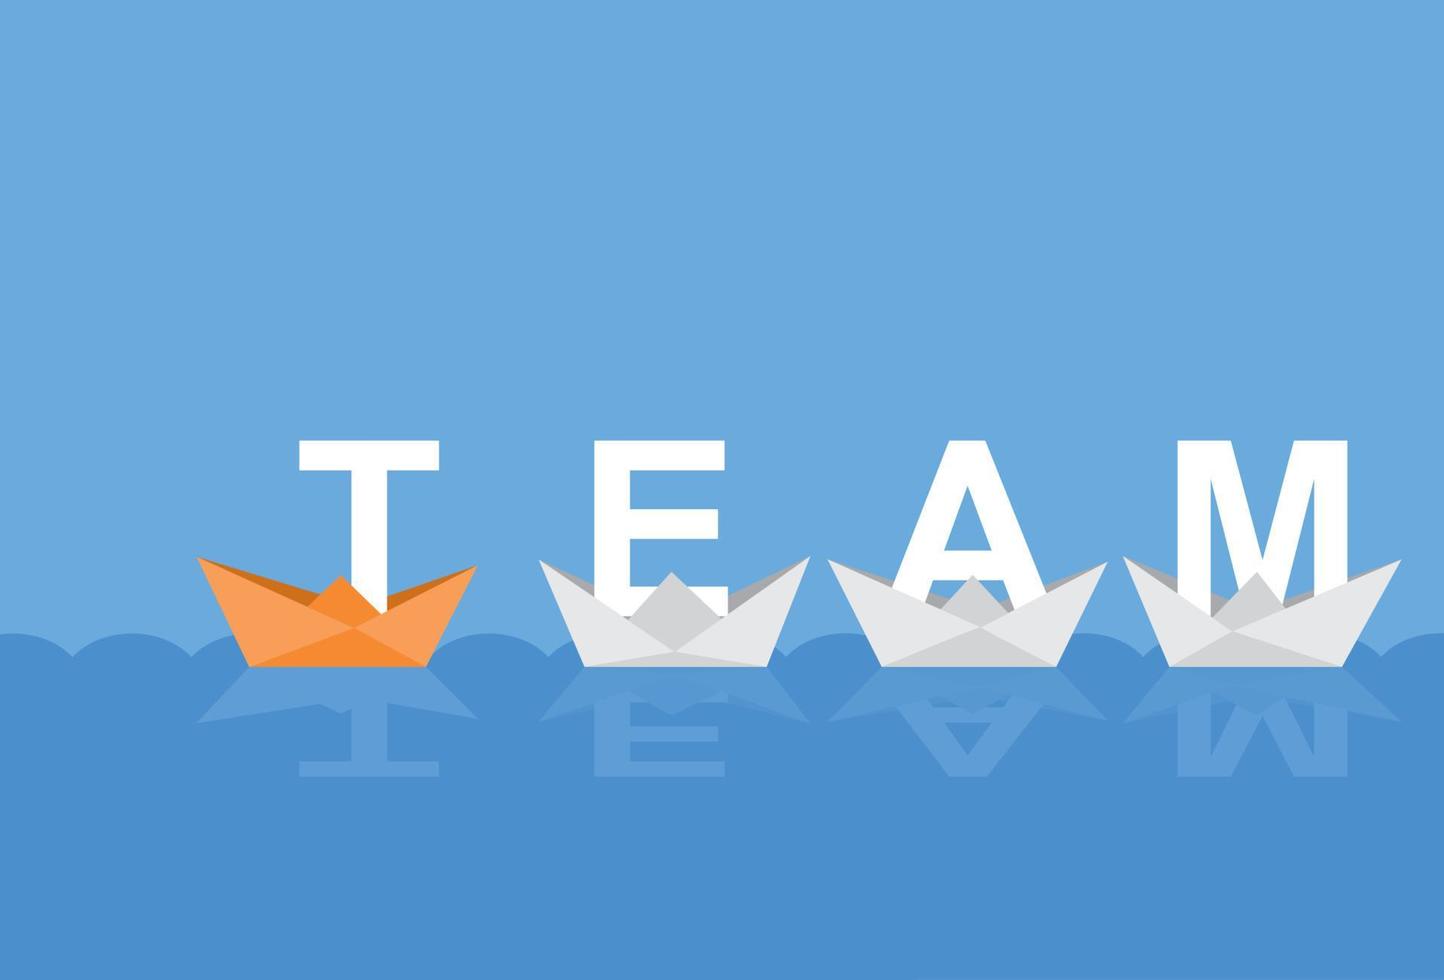 Leadership and team words at sea vector